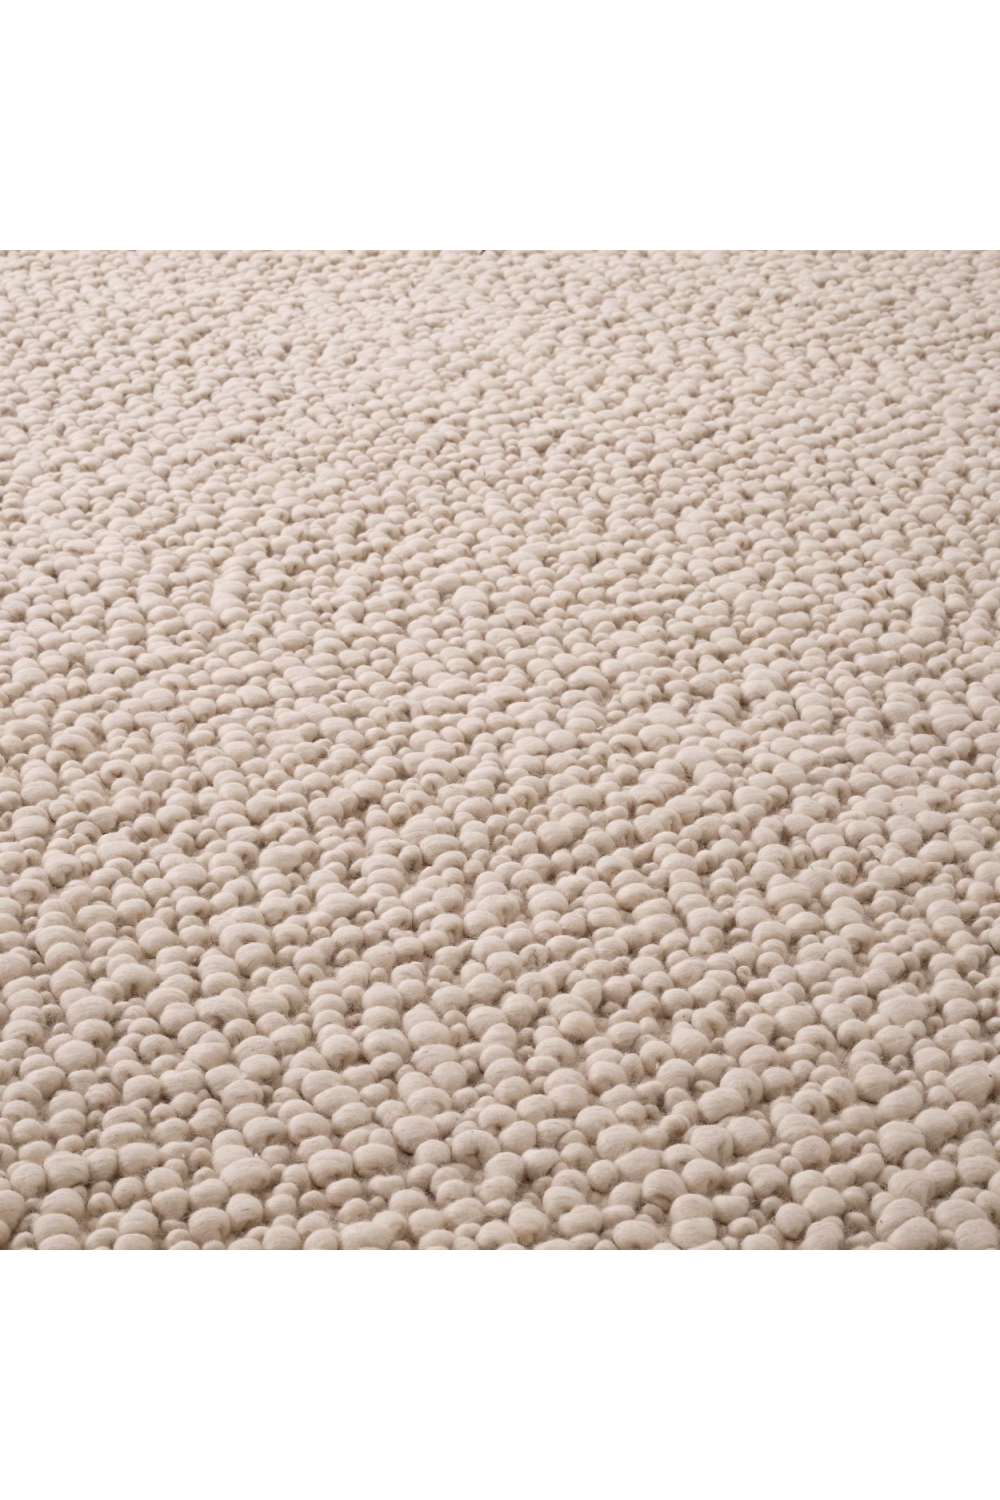 Ivory Wool Carpet | Eichholtz Schillinger | Oroa.com